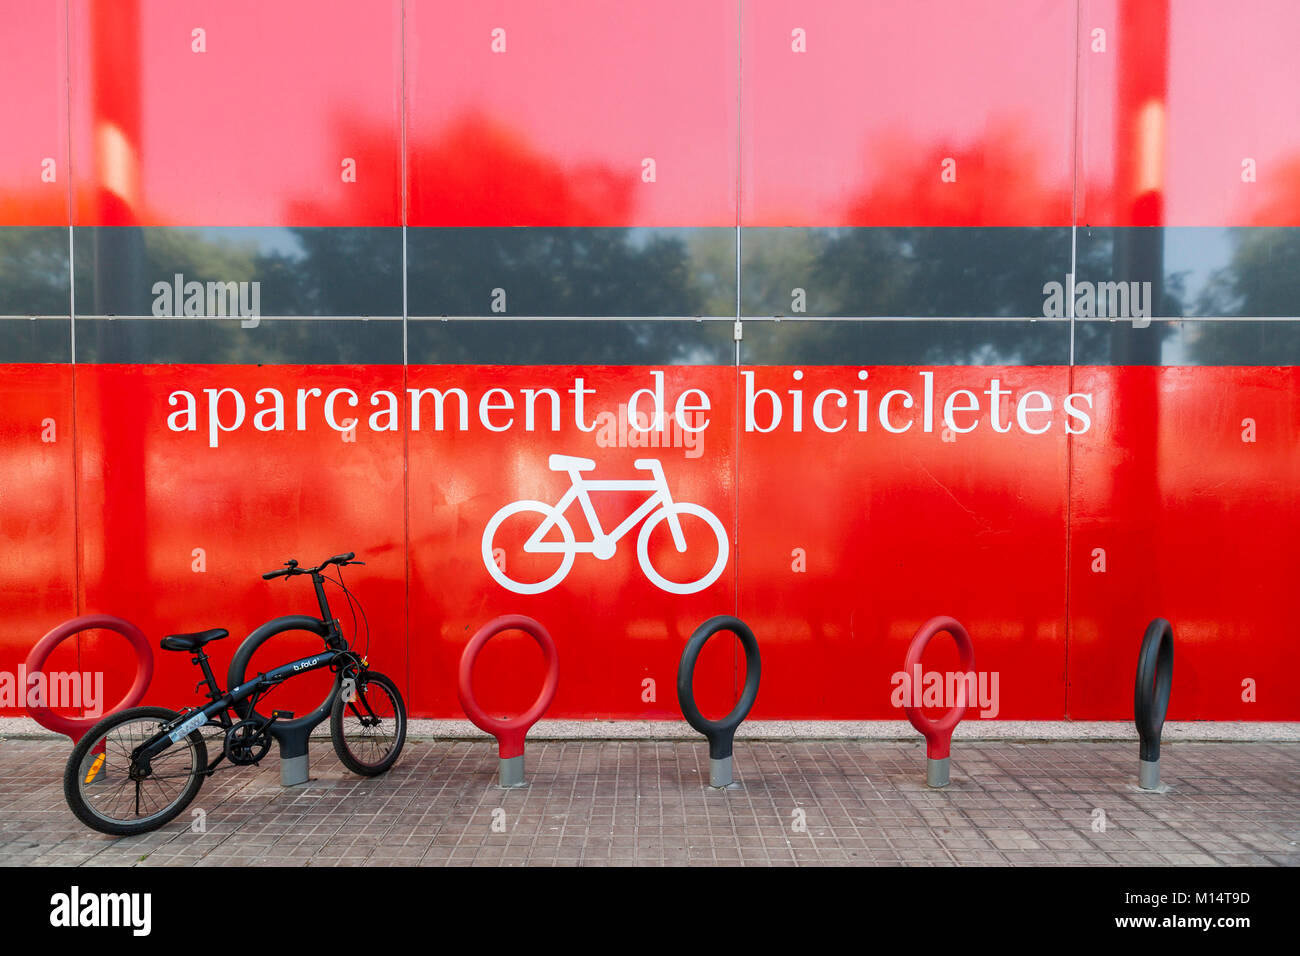 Parking de bicicletas, aparcament de bicicletes,signo Catalán, Barcelona  Fotografía de stock - Alamy